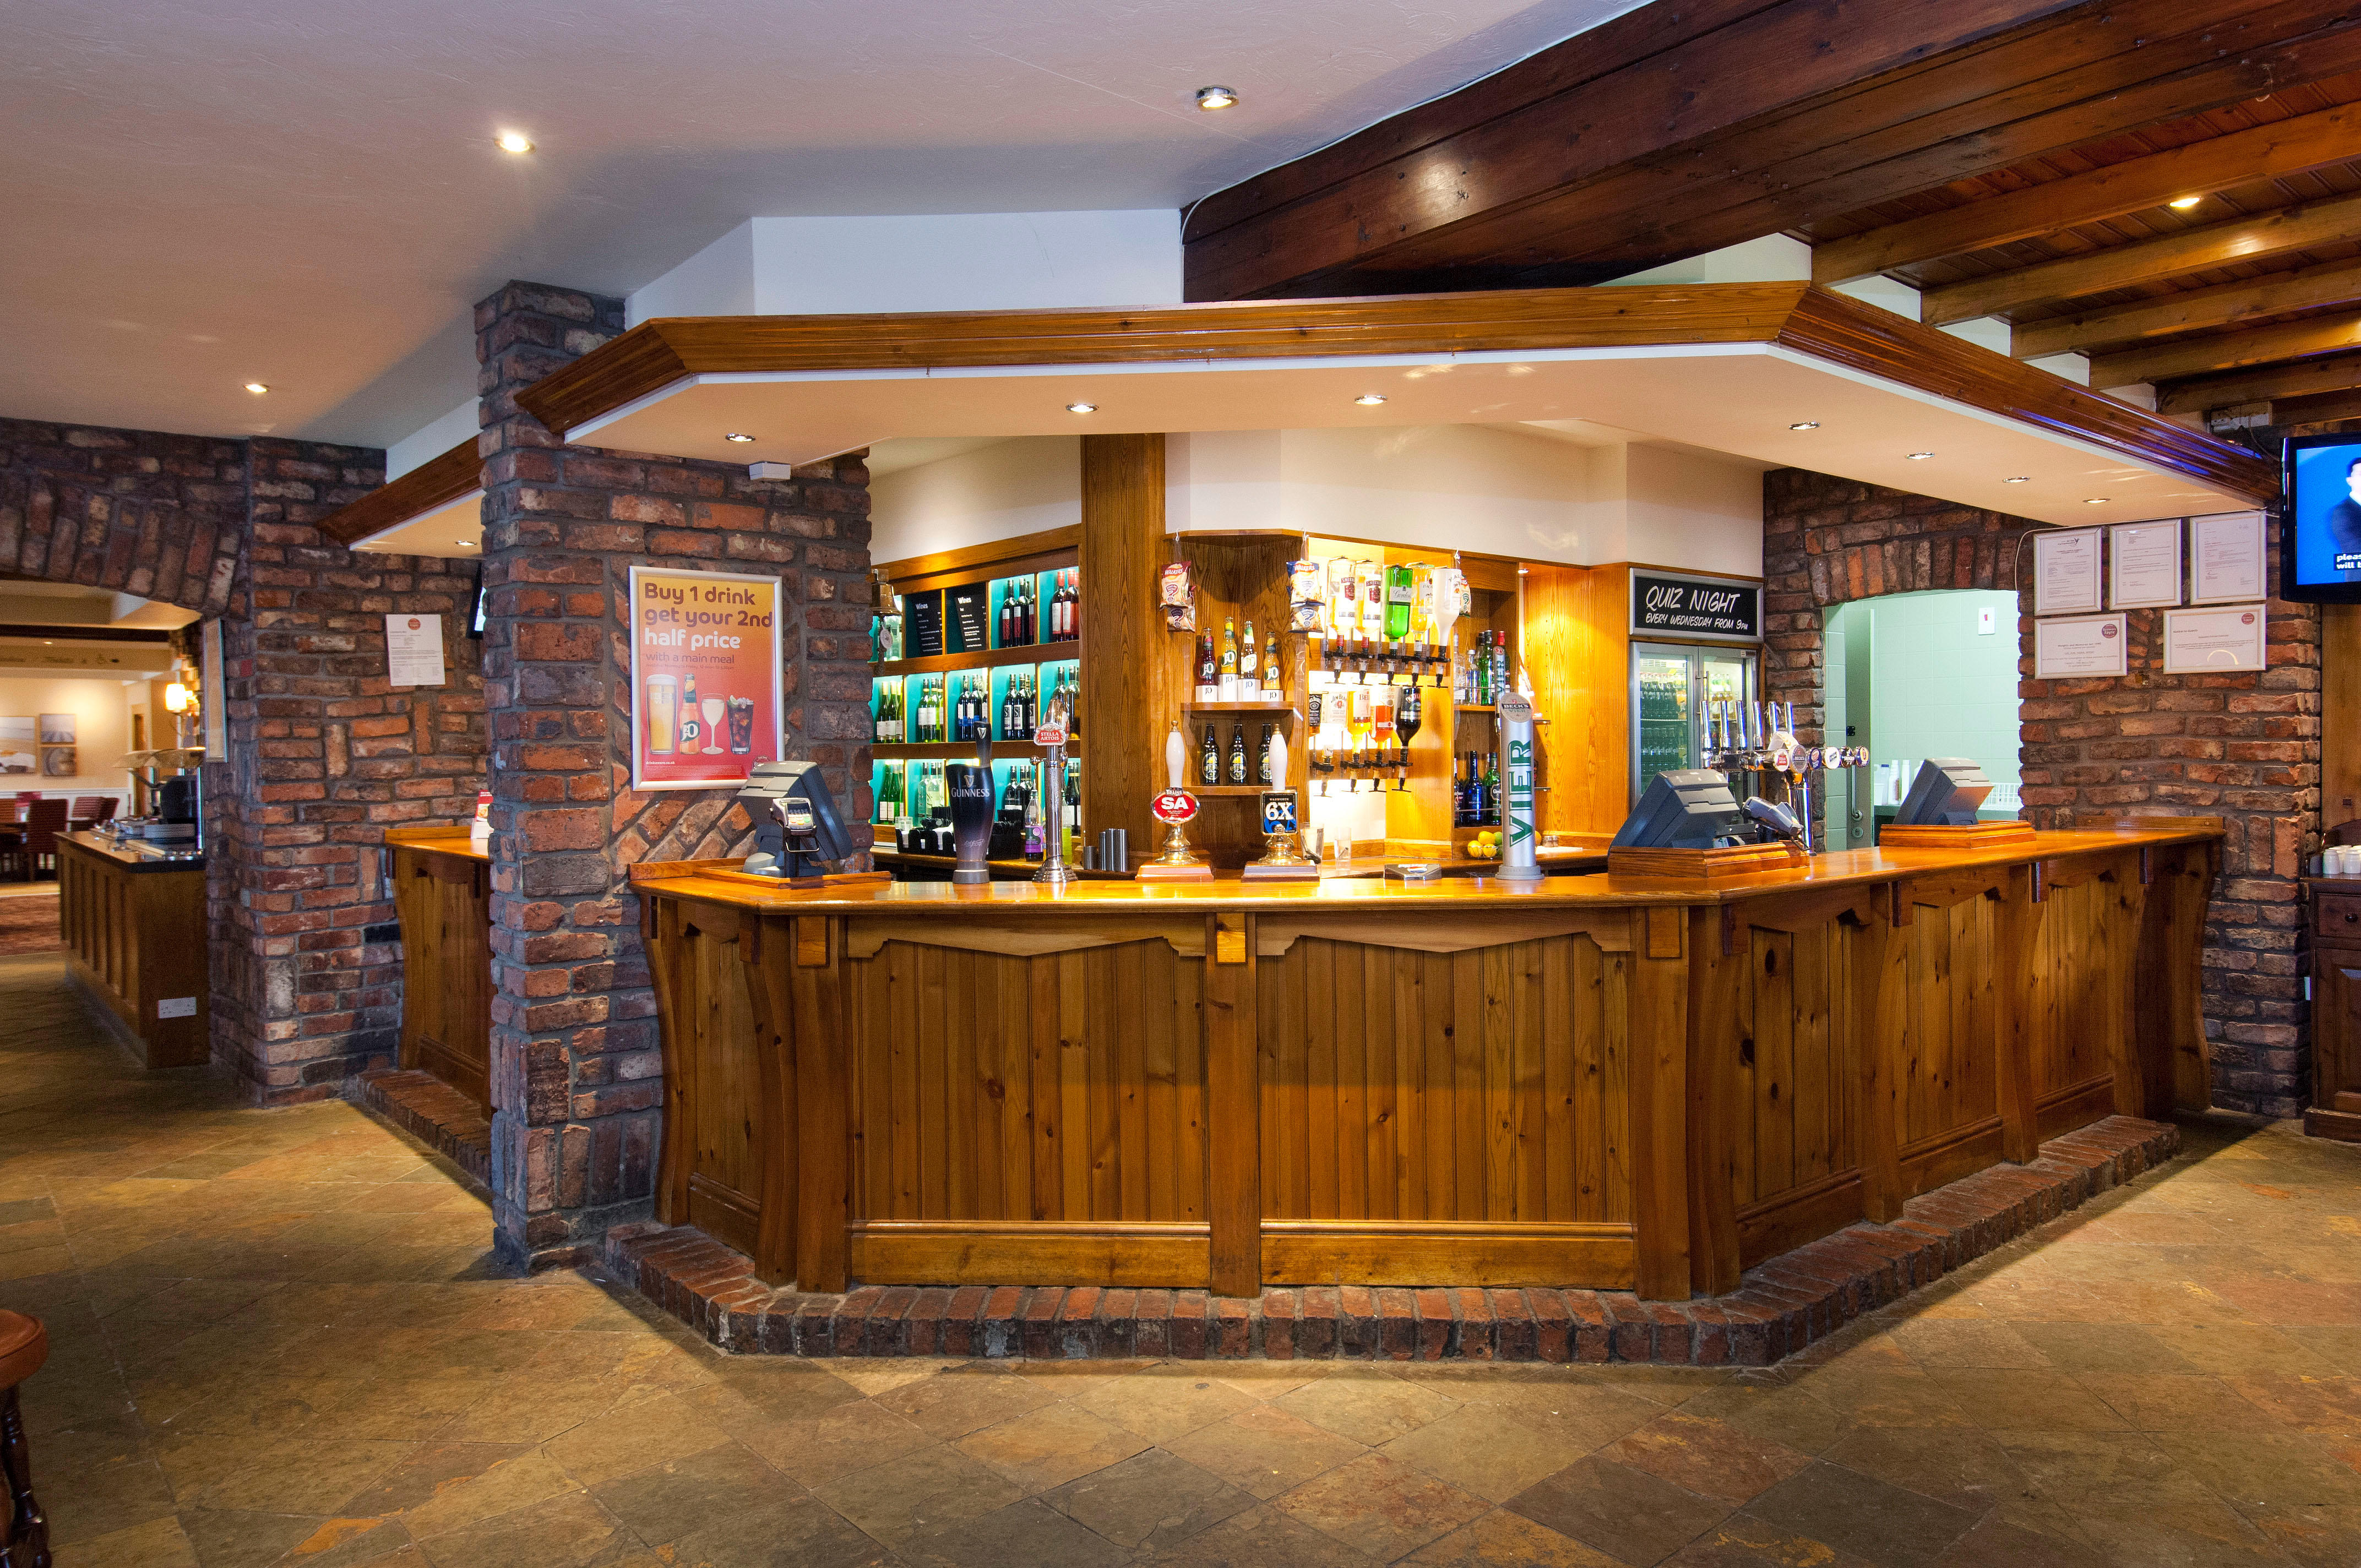 Brewers Fayre restaurant interior Premier Inn Llanelli Central West hotel Llanelli 03333 219258